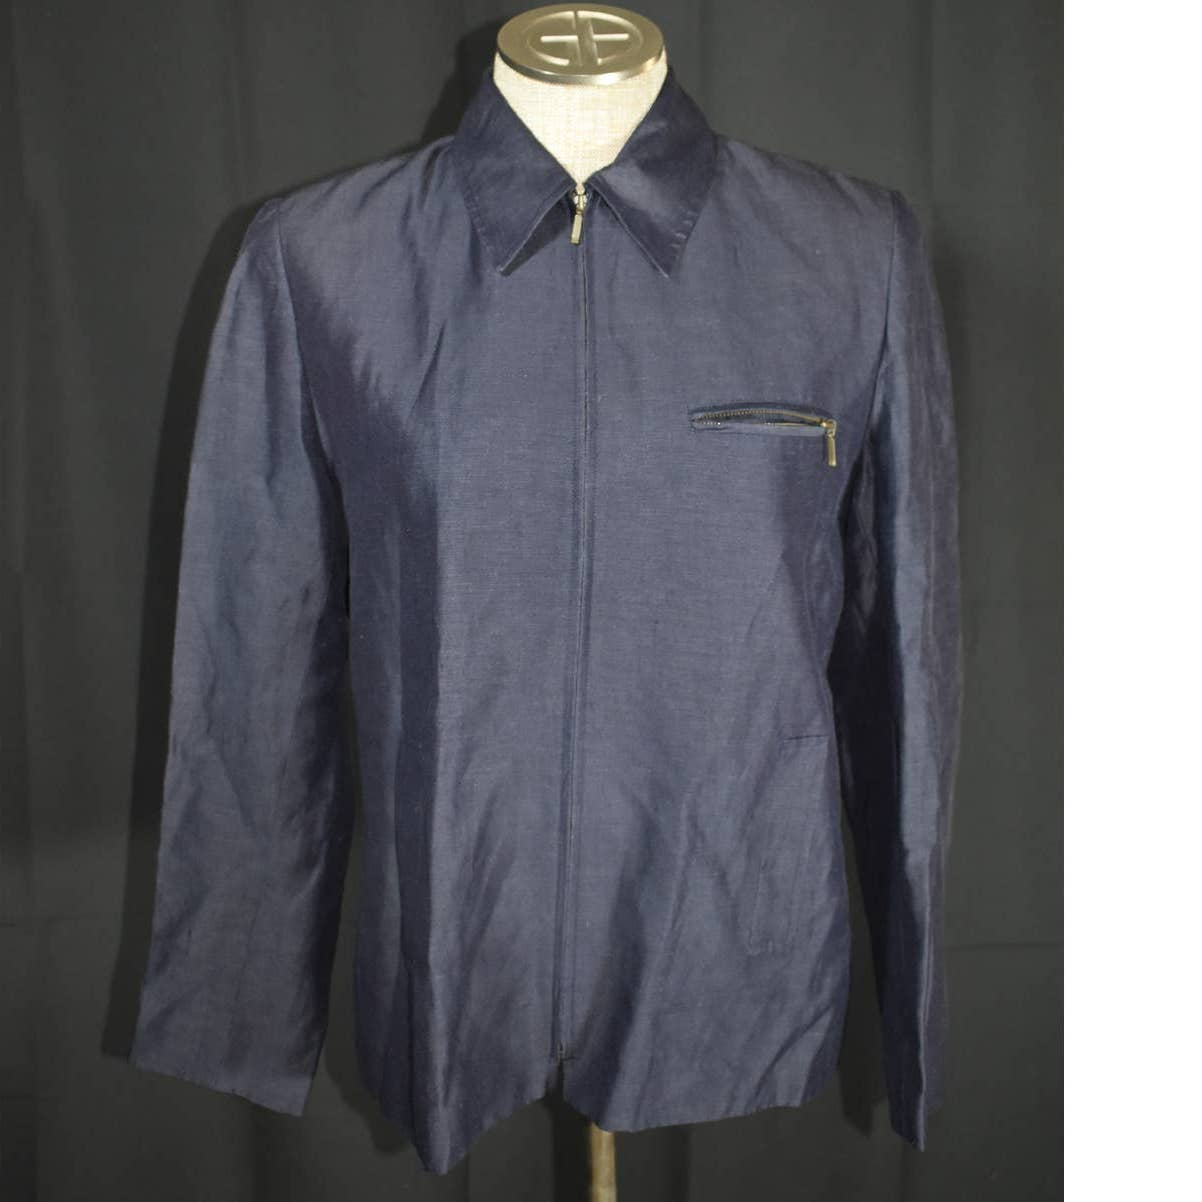 Classique Entier Navy Blue Silk and Linen Zip Up Jacket - M